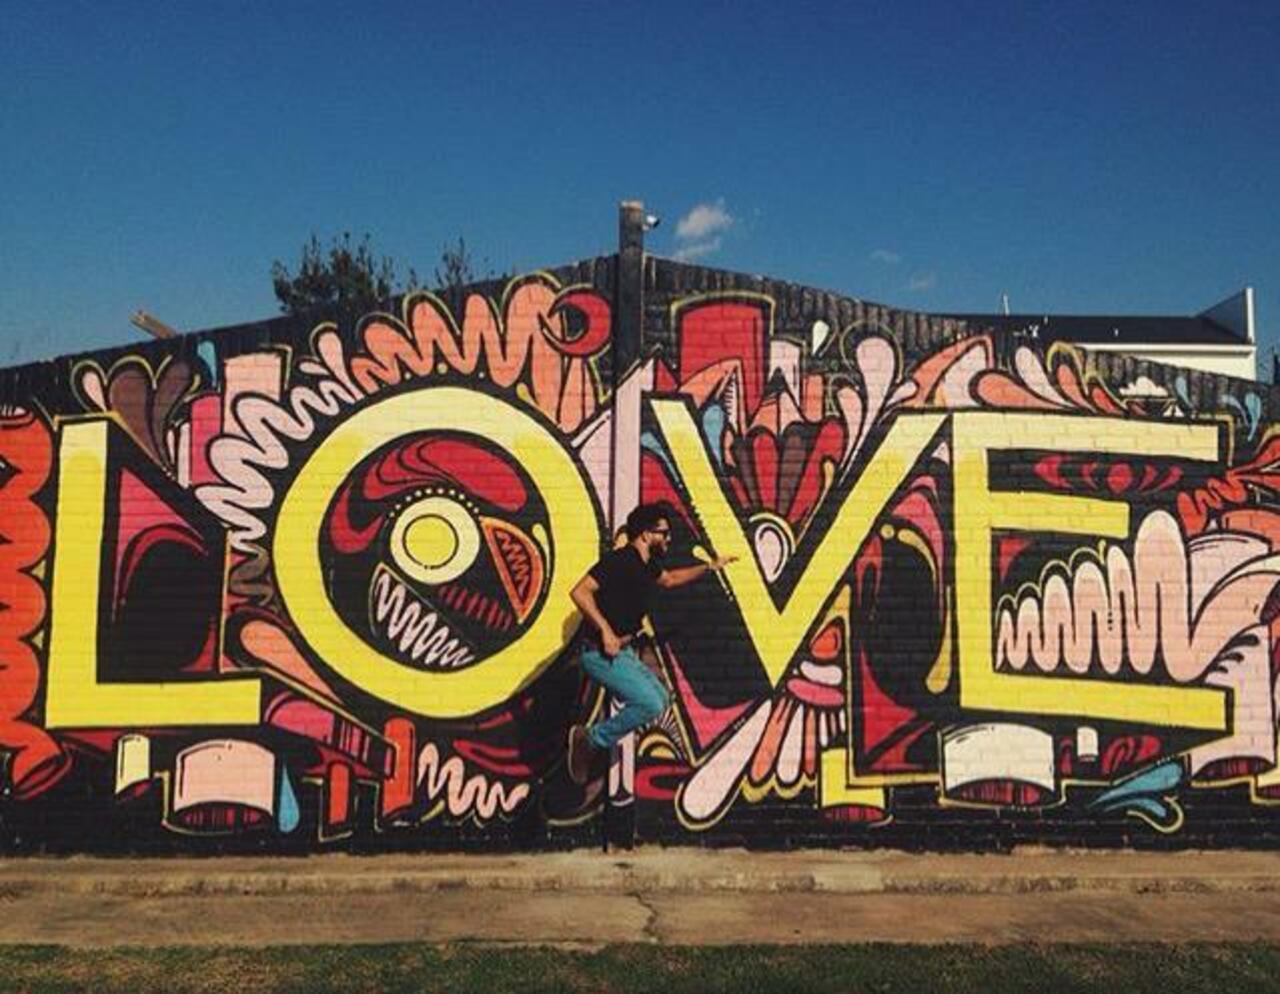 RT @BlossomTweetMe: I love this: Love ❤️
Street Art by WileyArt

#art #graffiti #mural #streetart http://t.co/AWiPR9gVwi MT @GoogleStreetArt